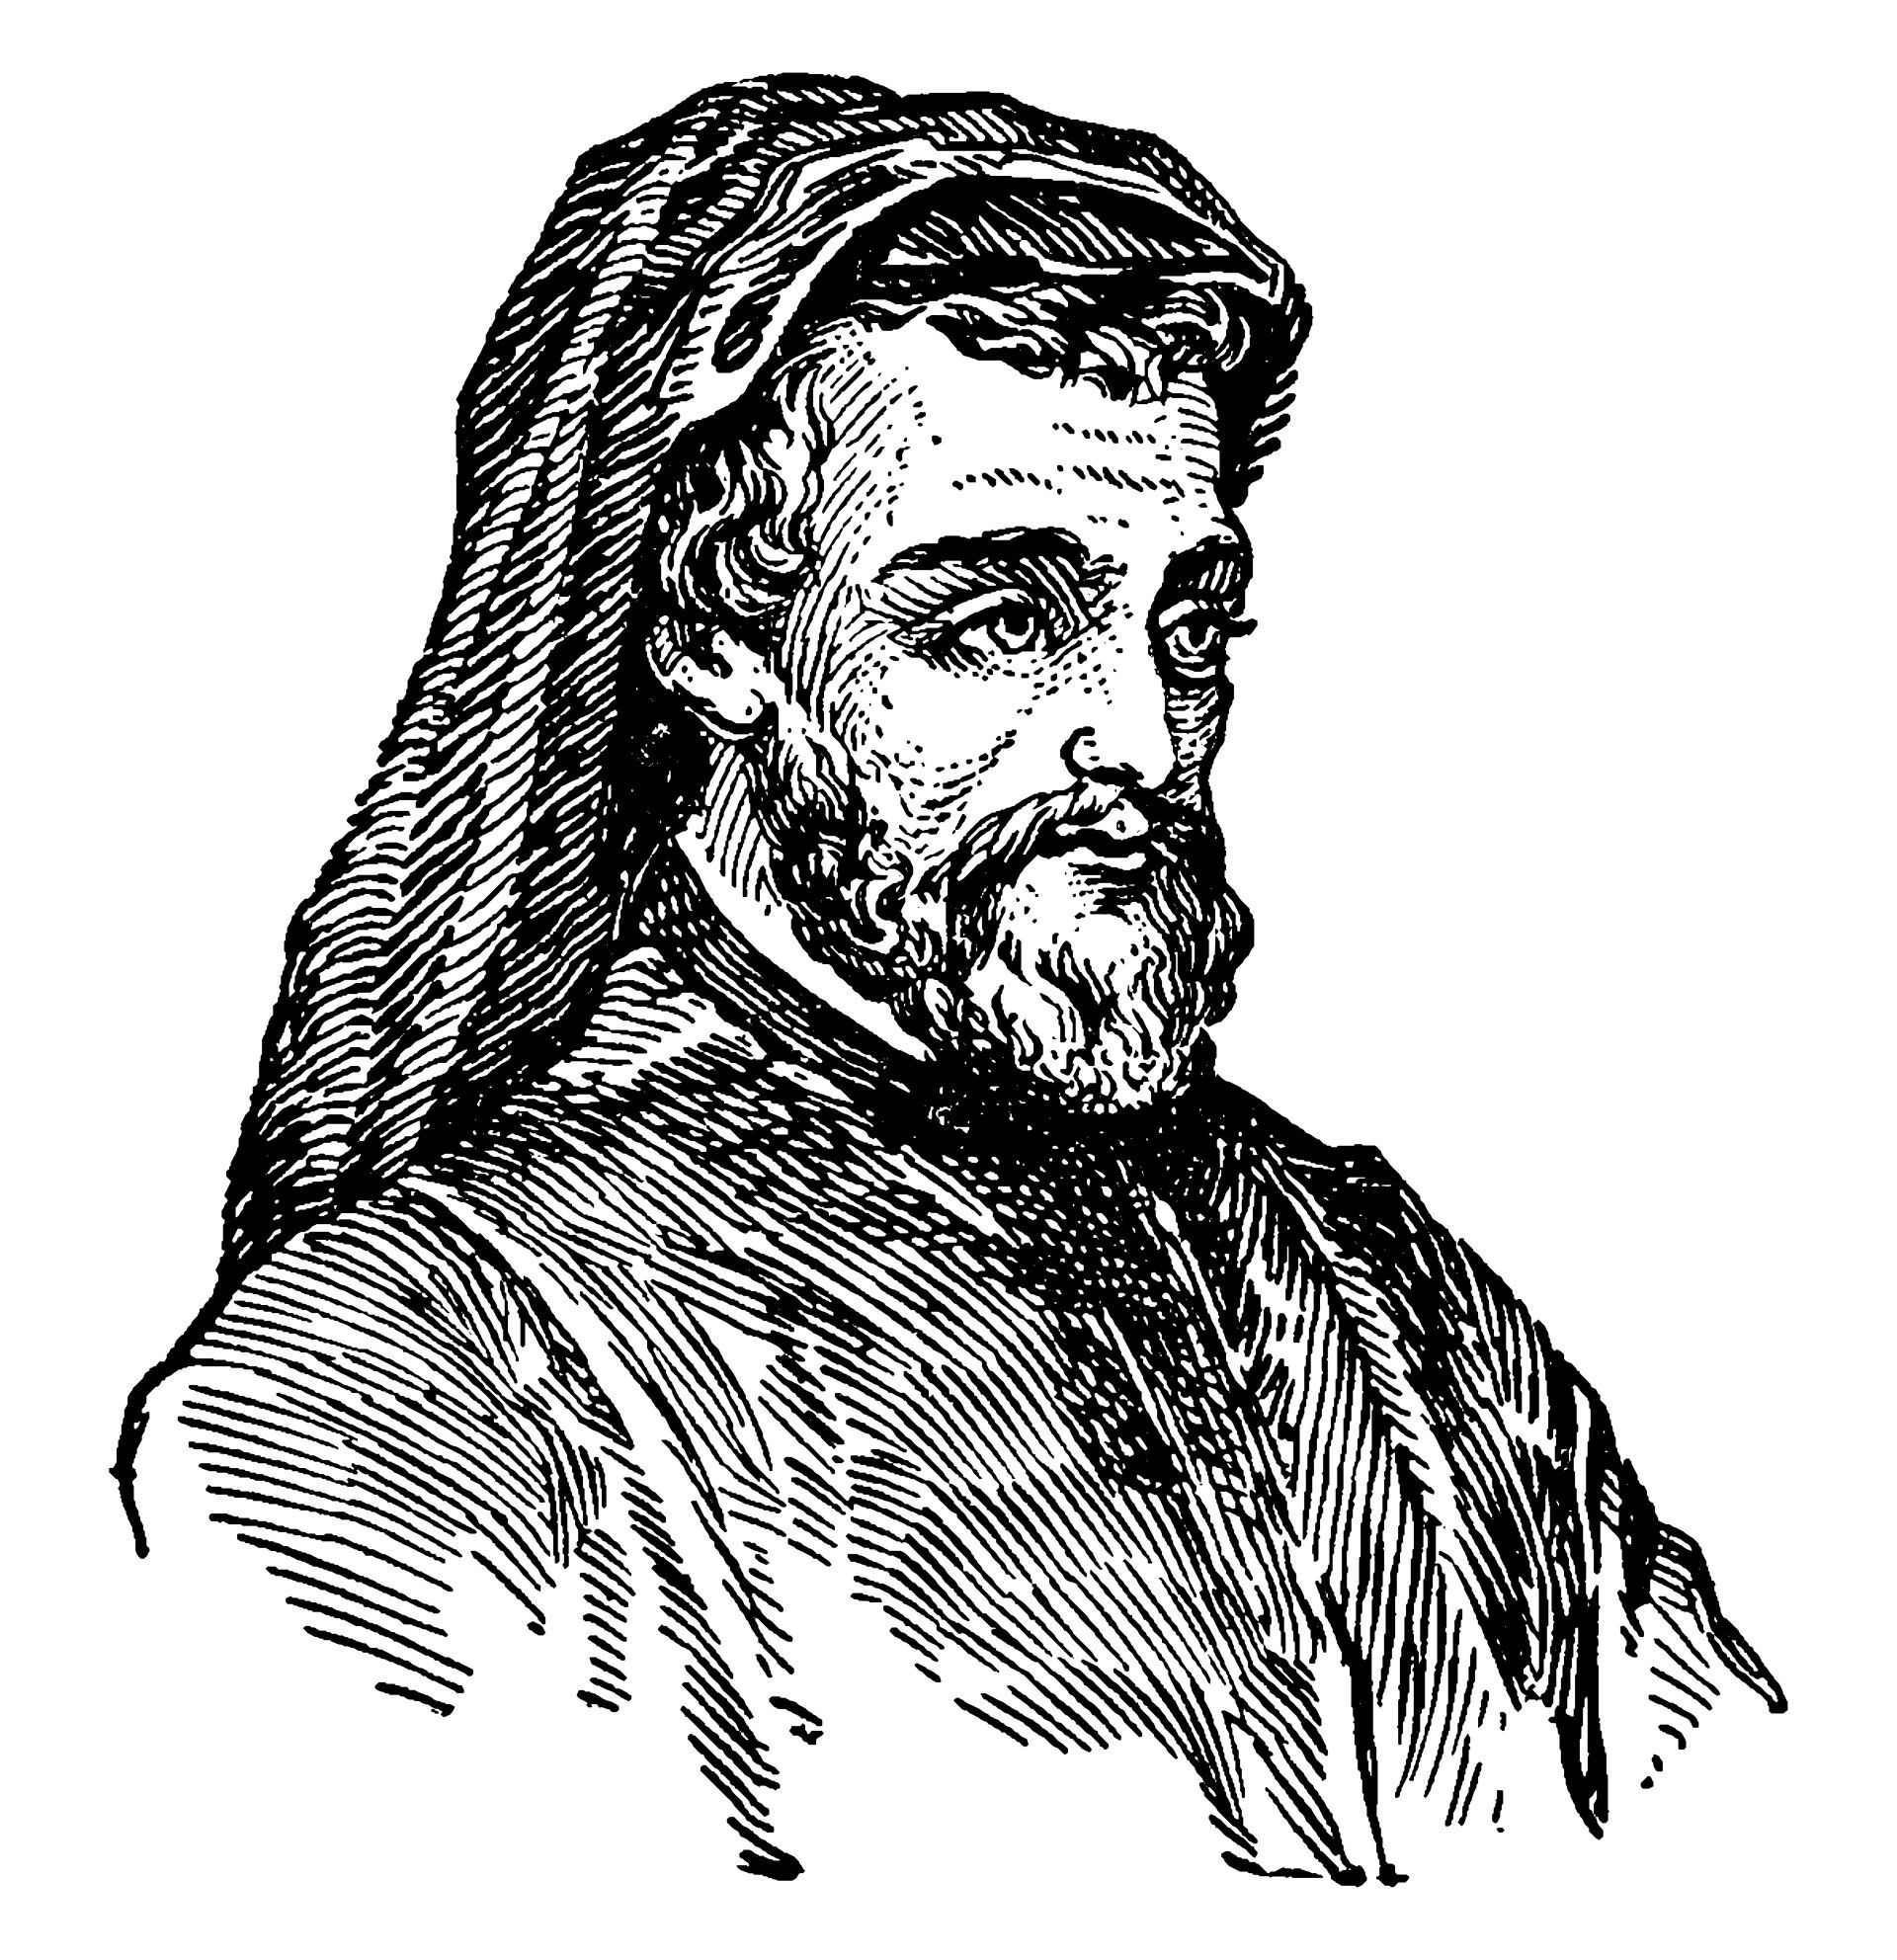 Pencil sketch of Geoffrey Chaucer